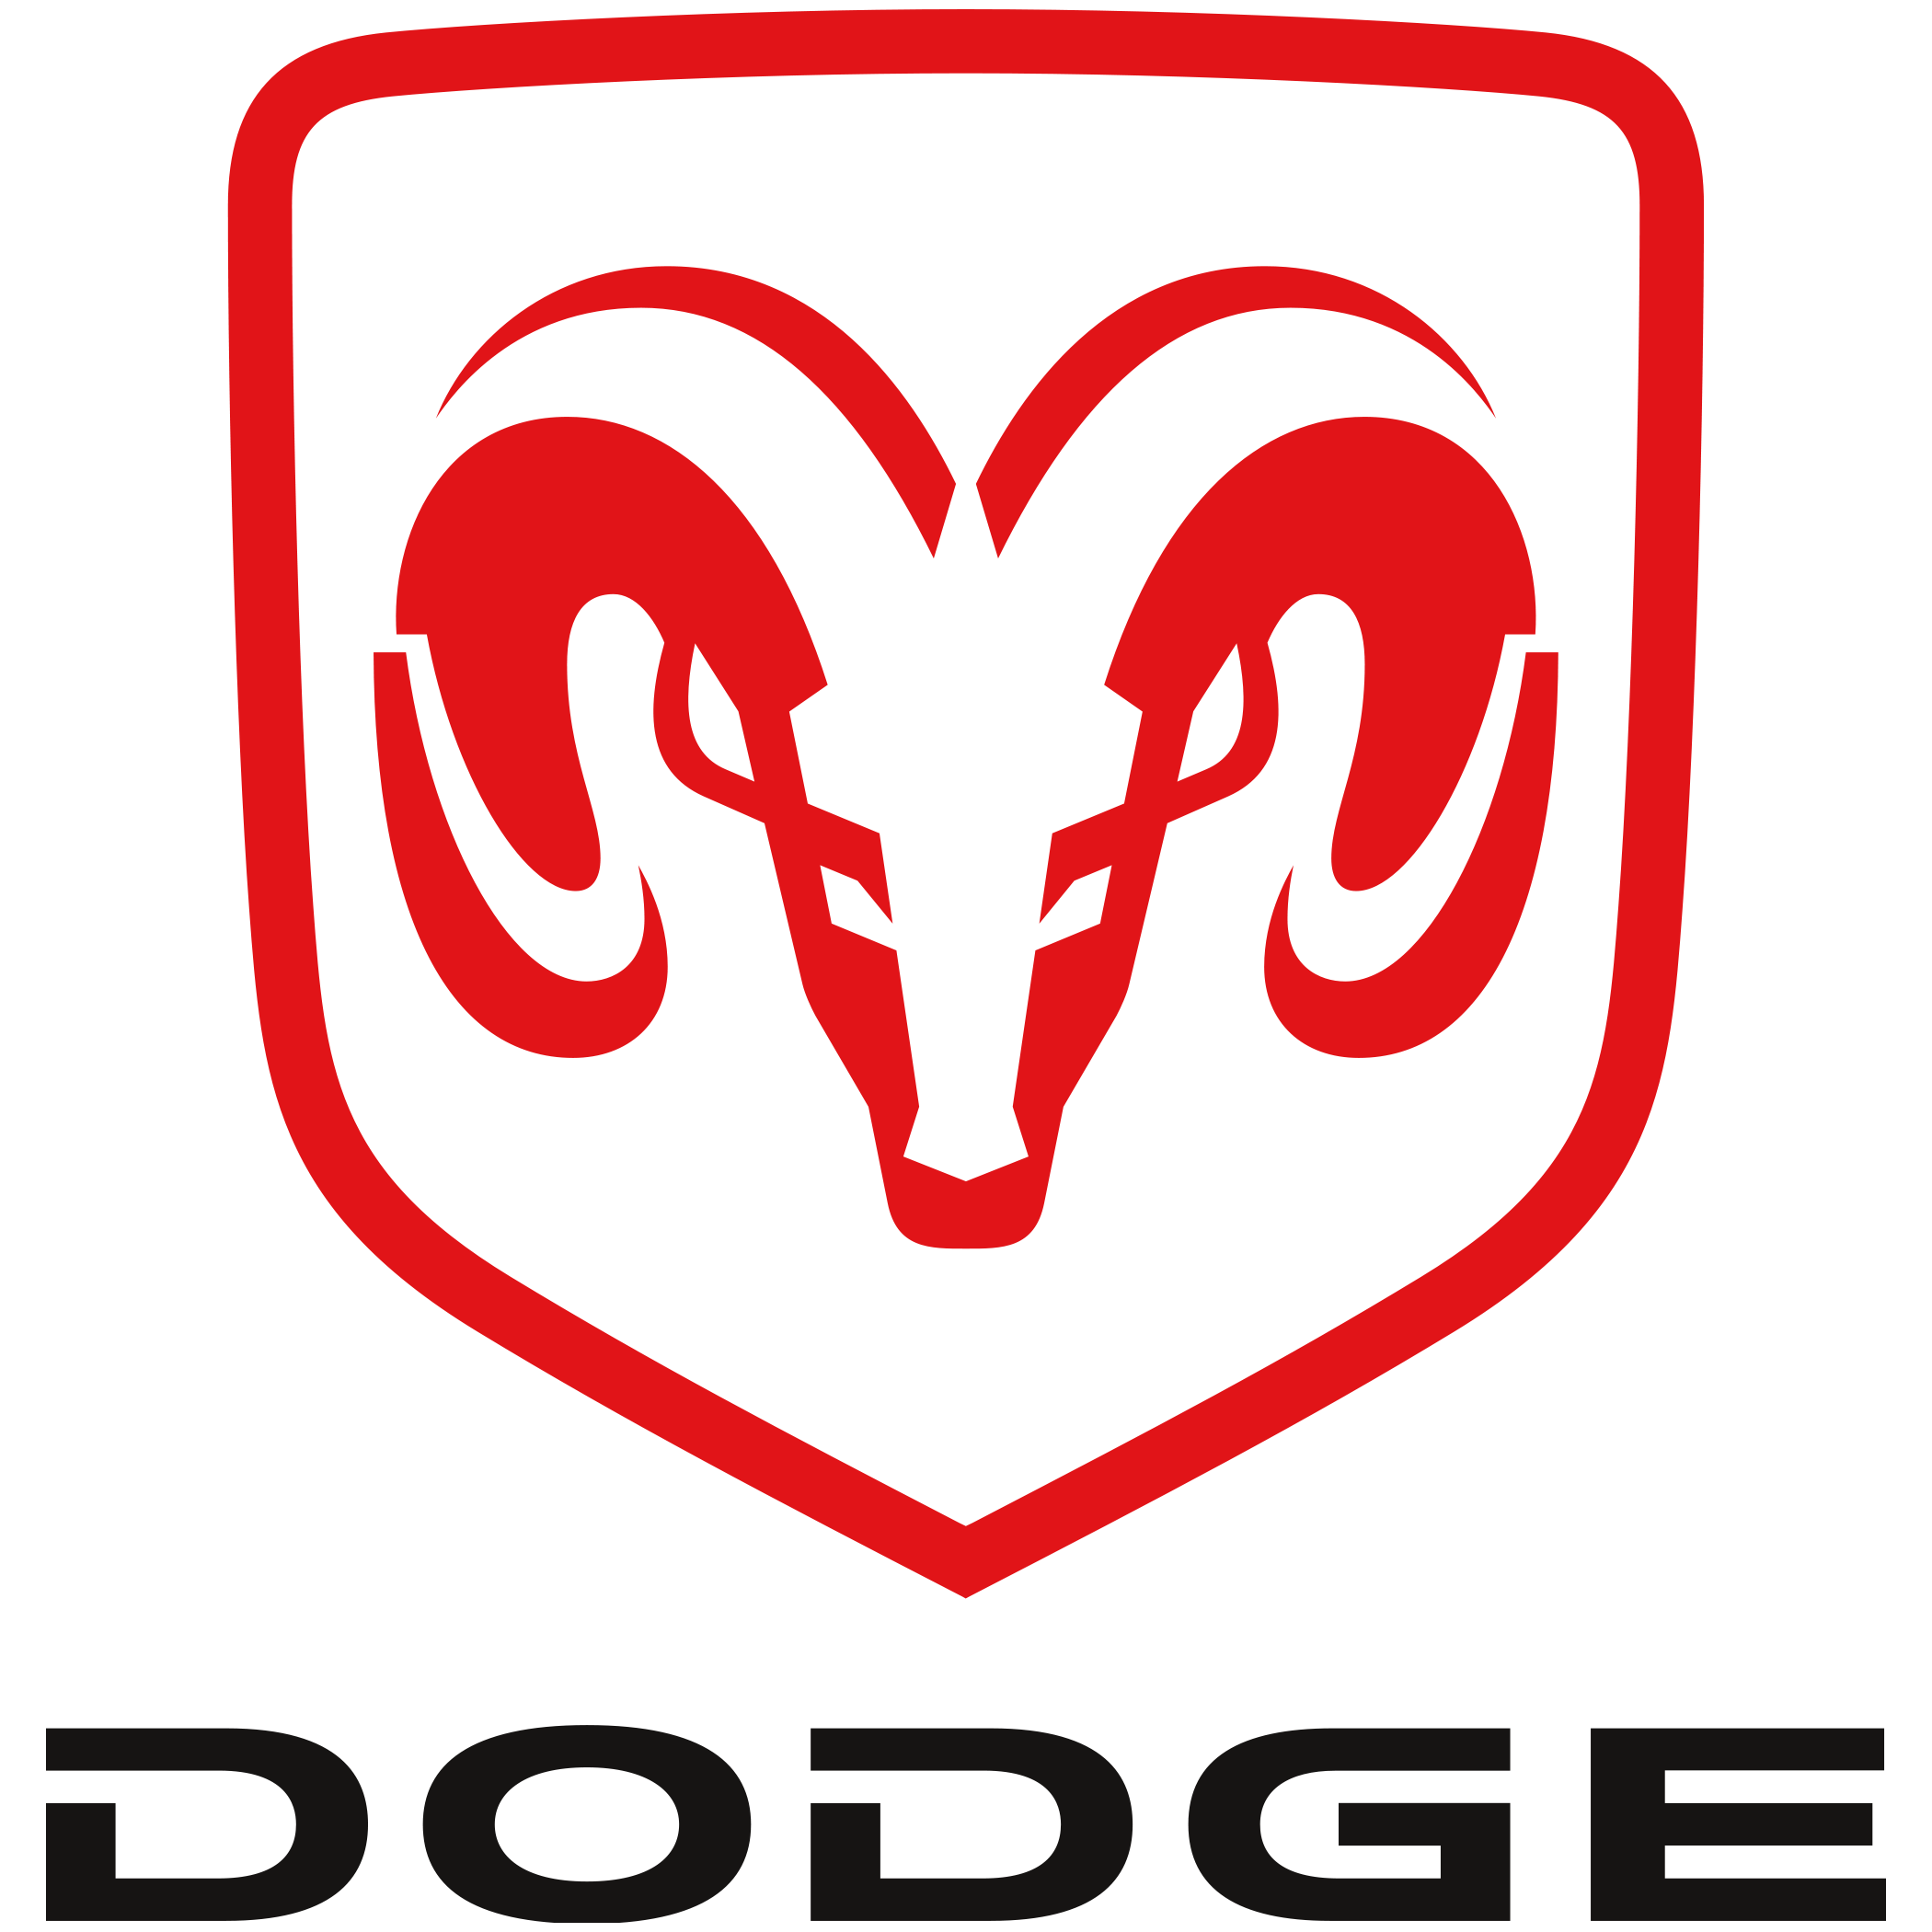 Classic Dodge Logo